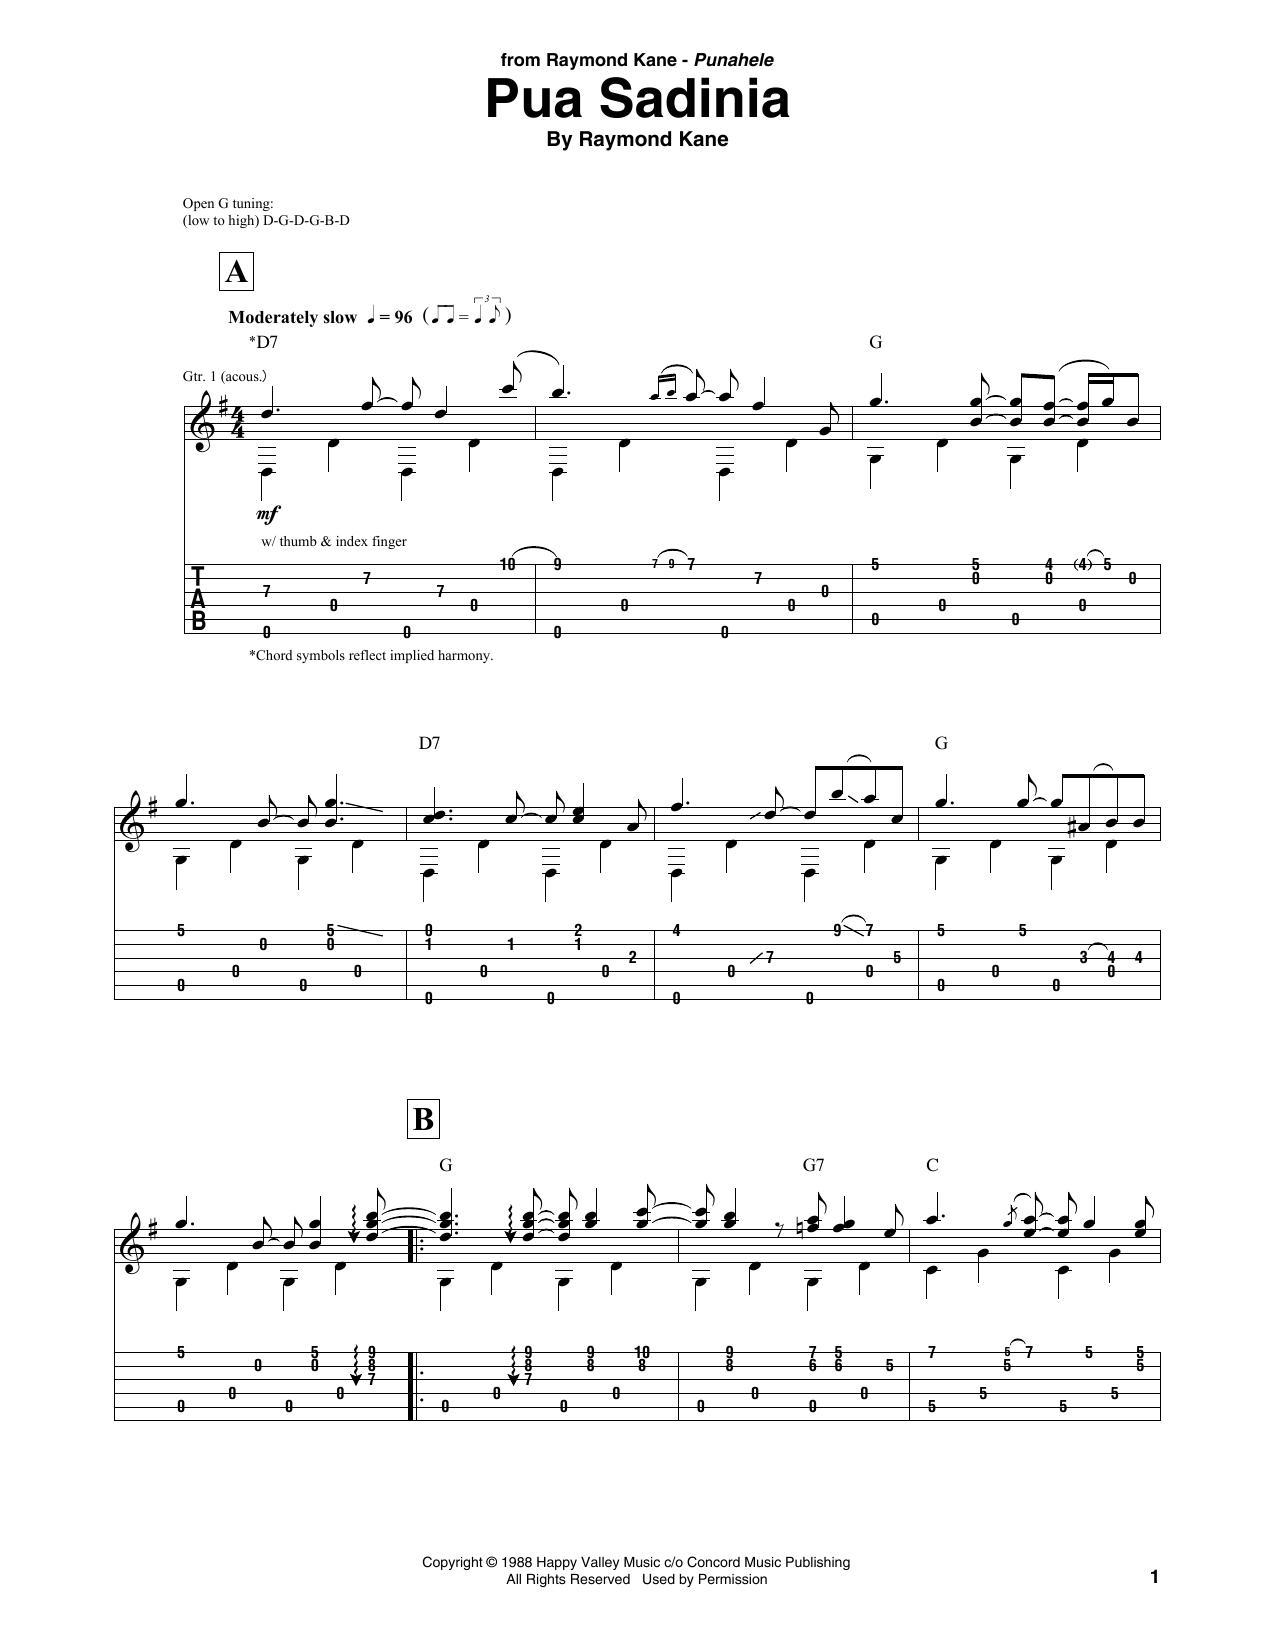 Raymond Kane Pua Sadinia Sheet Music Notes & Chords for Solo Guitar Tab - Download or Print PDF